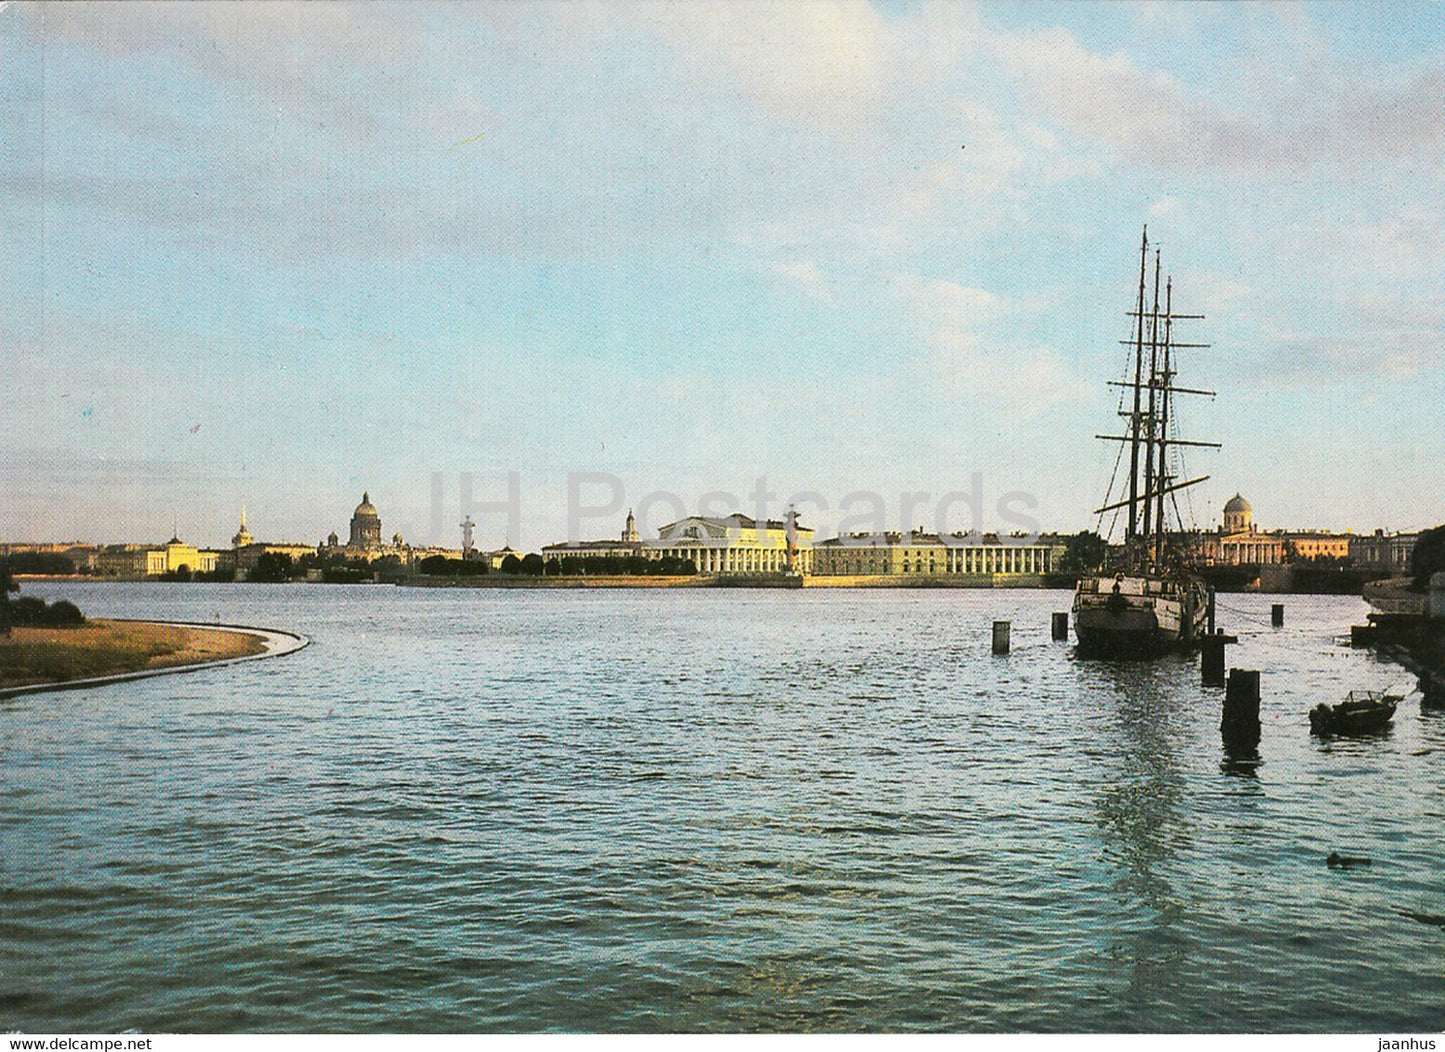 Leningrad - St Petersburg - The Spit of Vasilyevsky Island - sailing ship - 1984 - Russia USSR - unused - JH Postcards